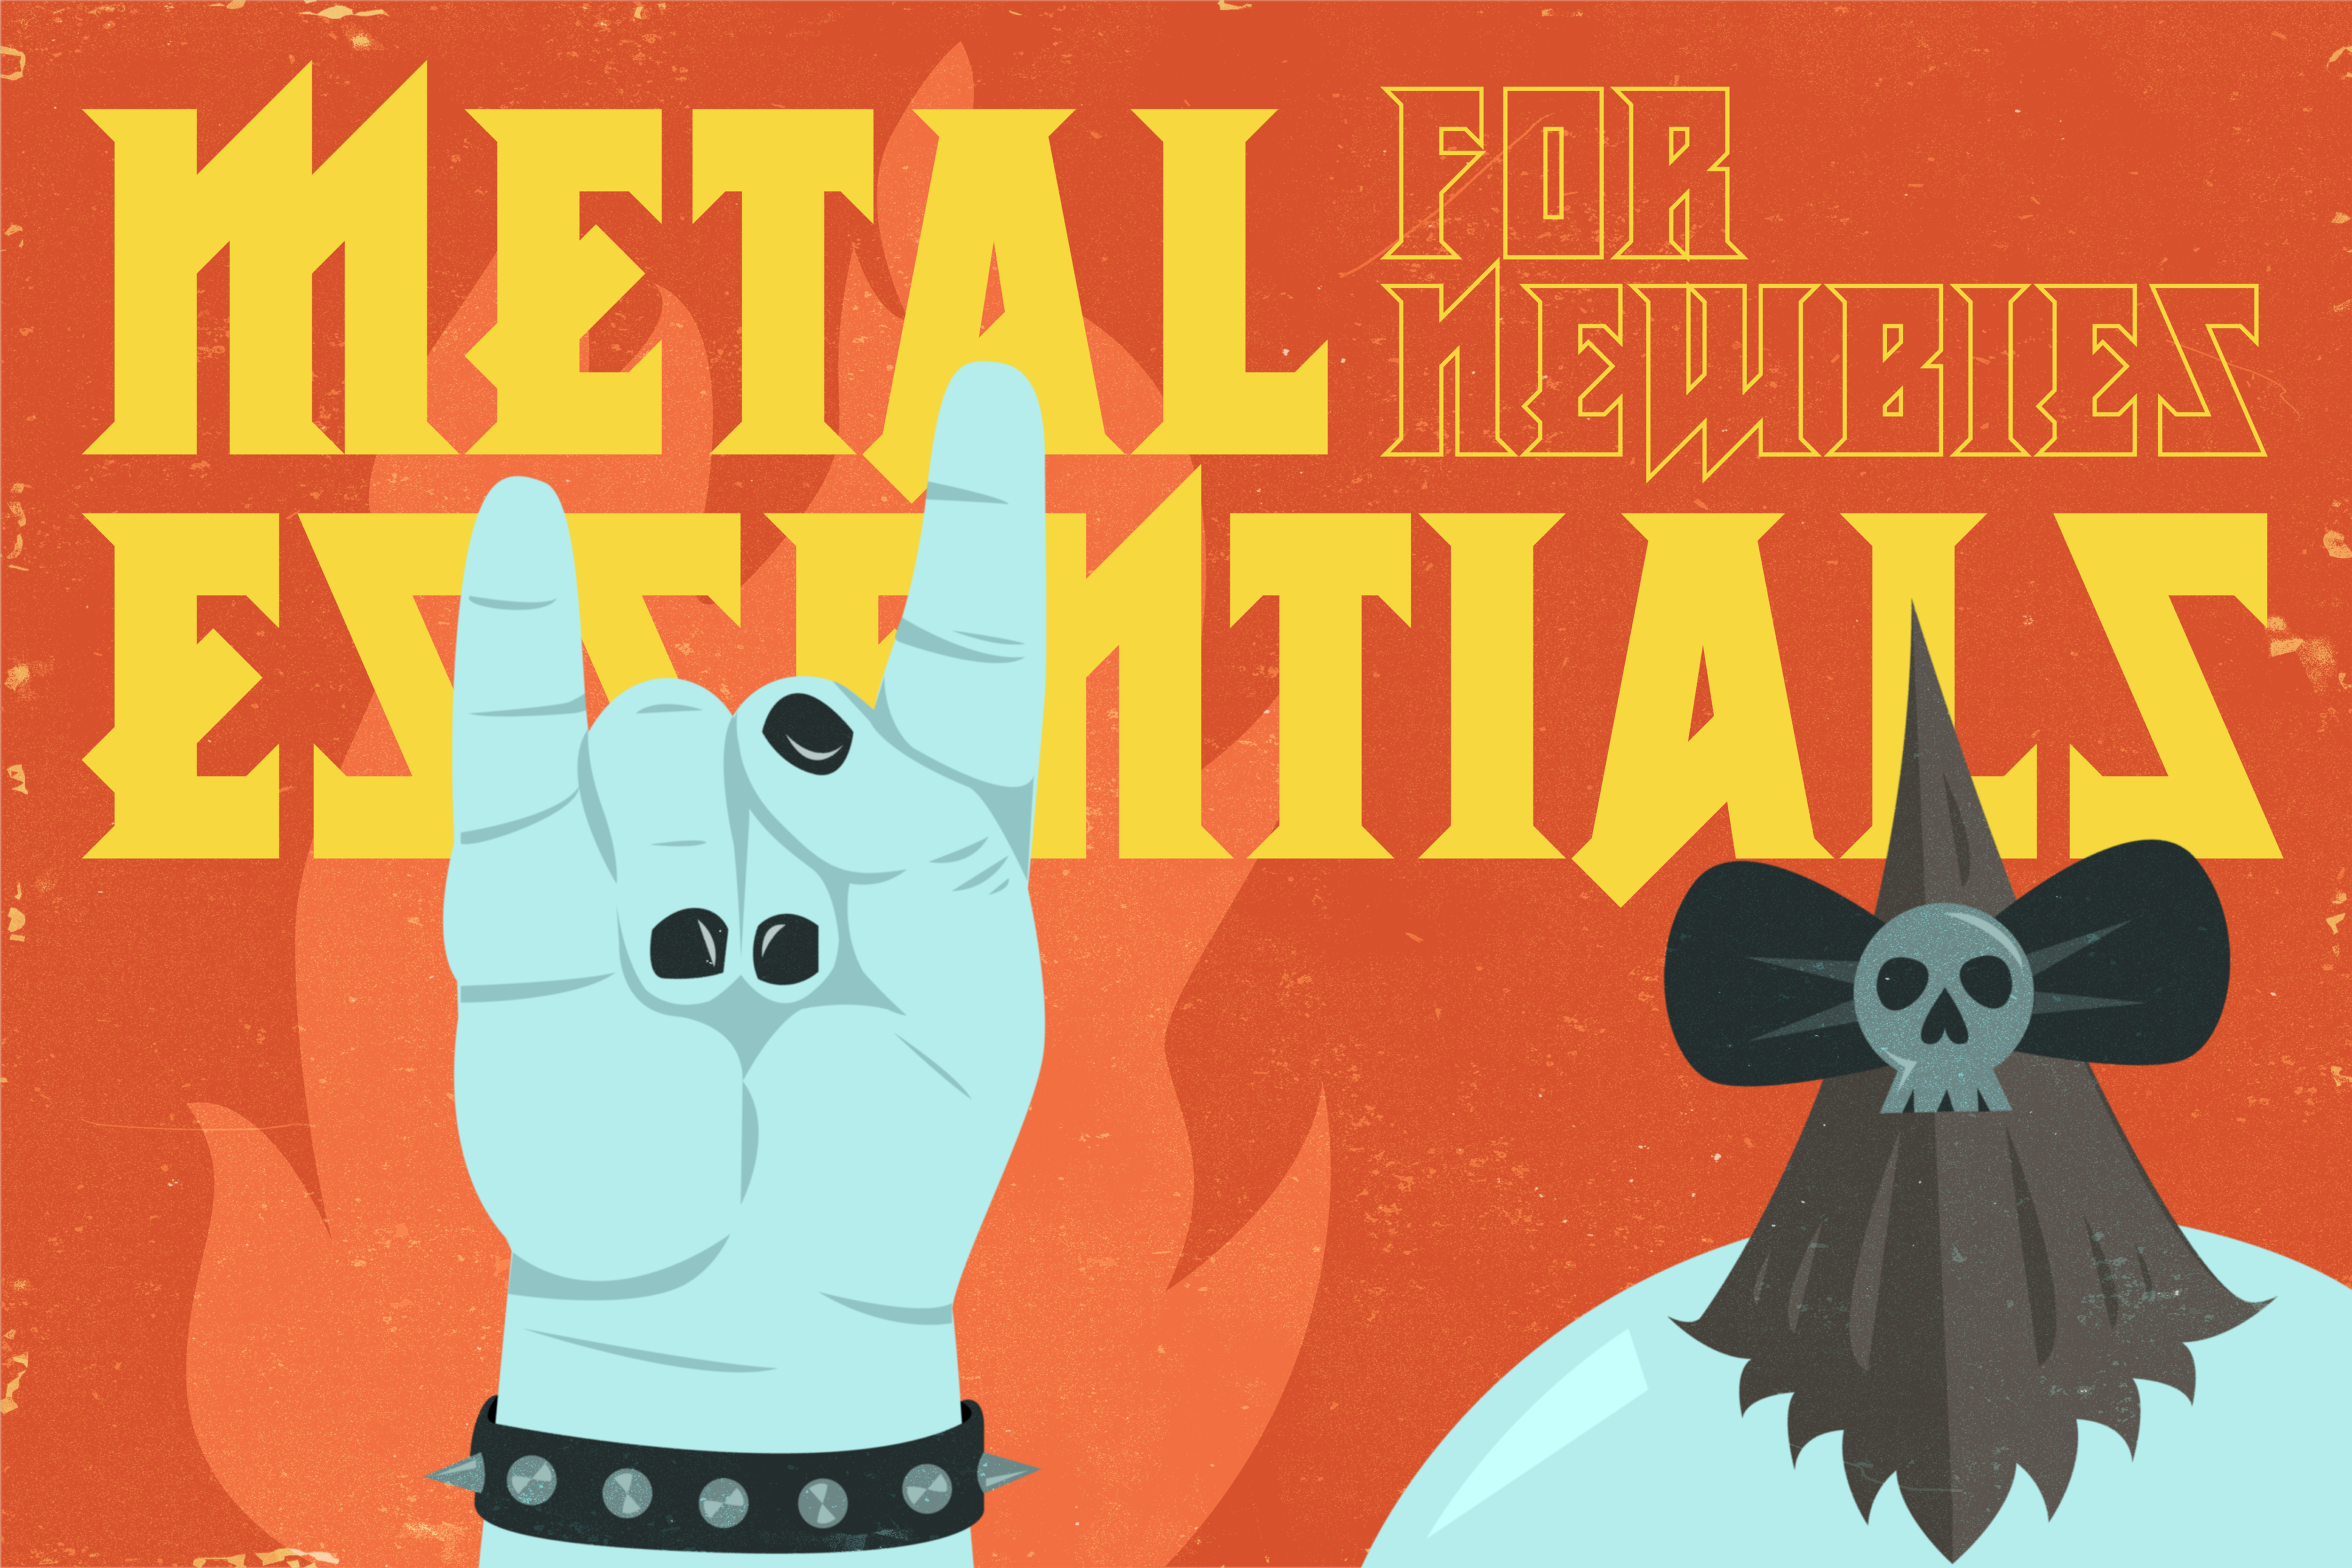 Metal Essentials For Newbies